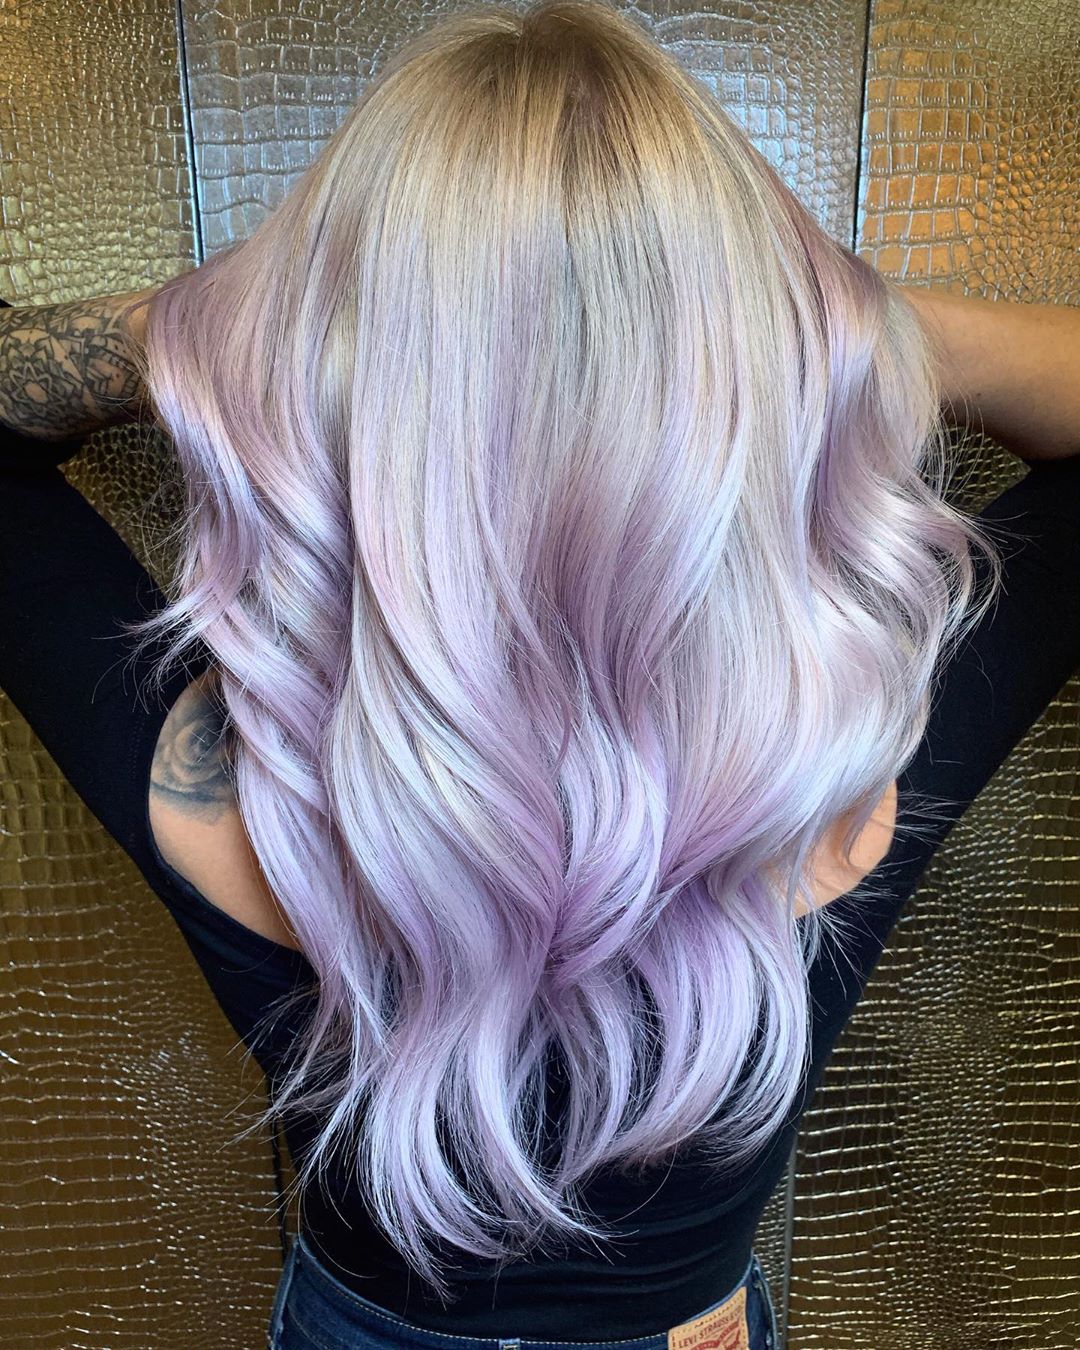 carol lynn davis add photo purple streaks in blonde hair pictures